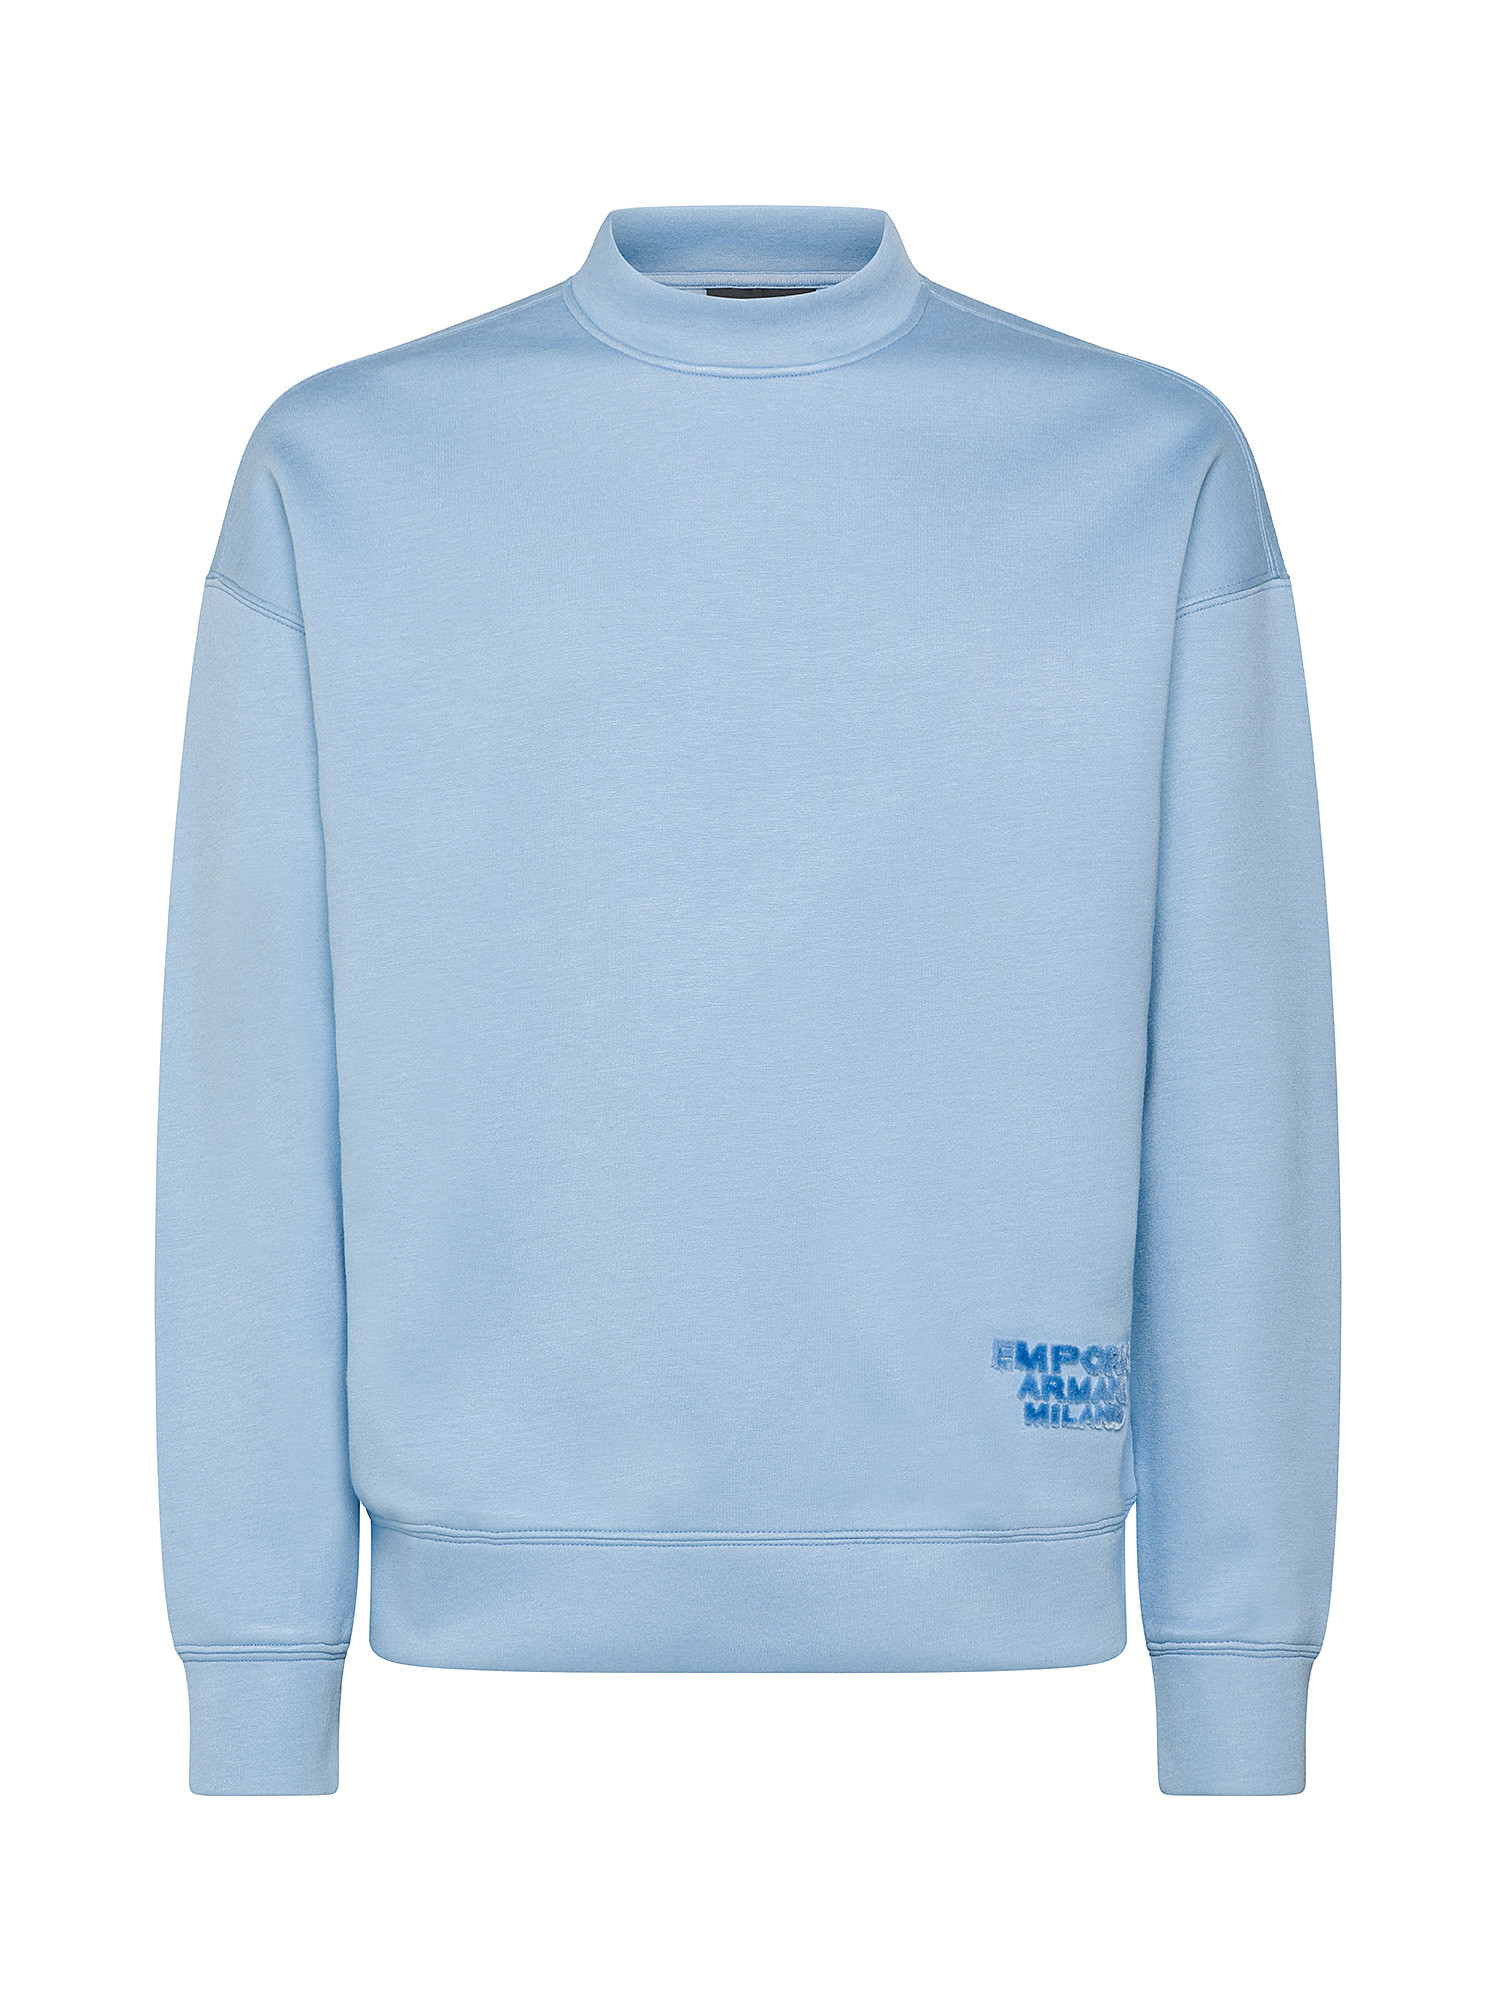 Emporio Armani - Sweatshirt with logo, Light Blue, large image number 0